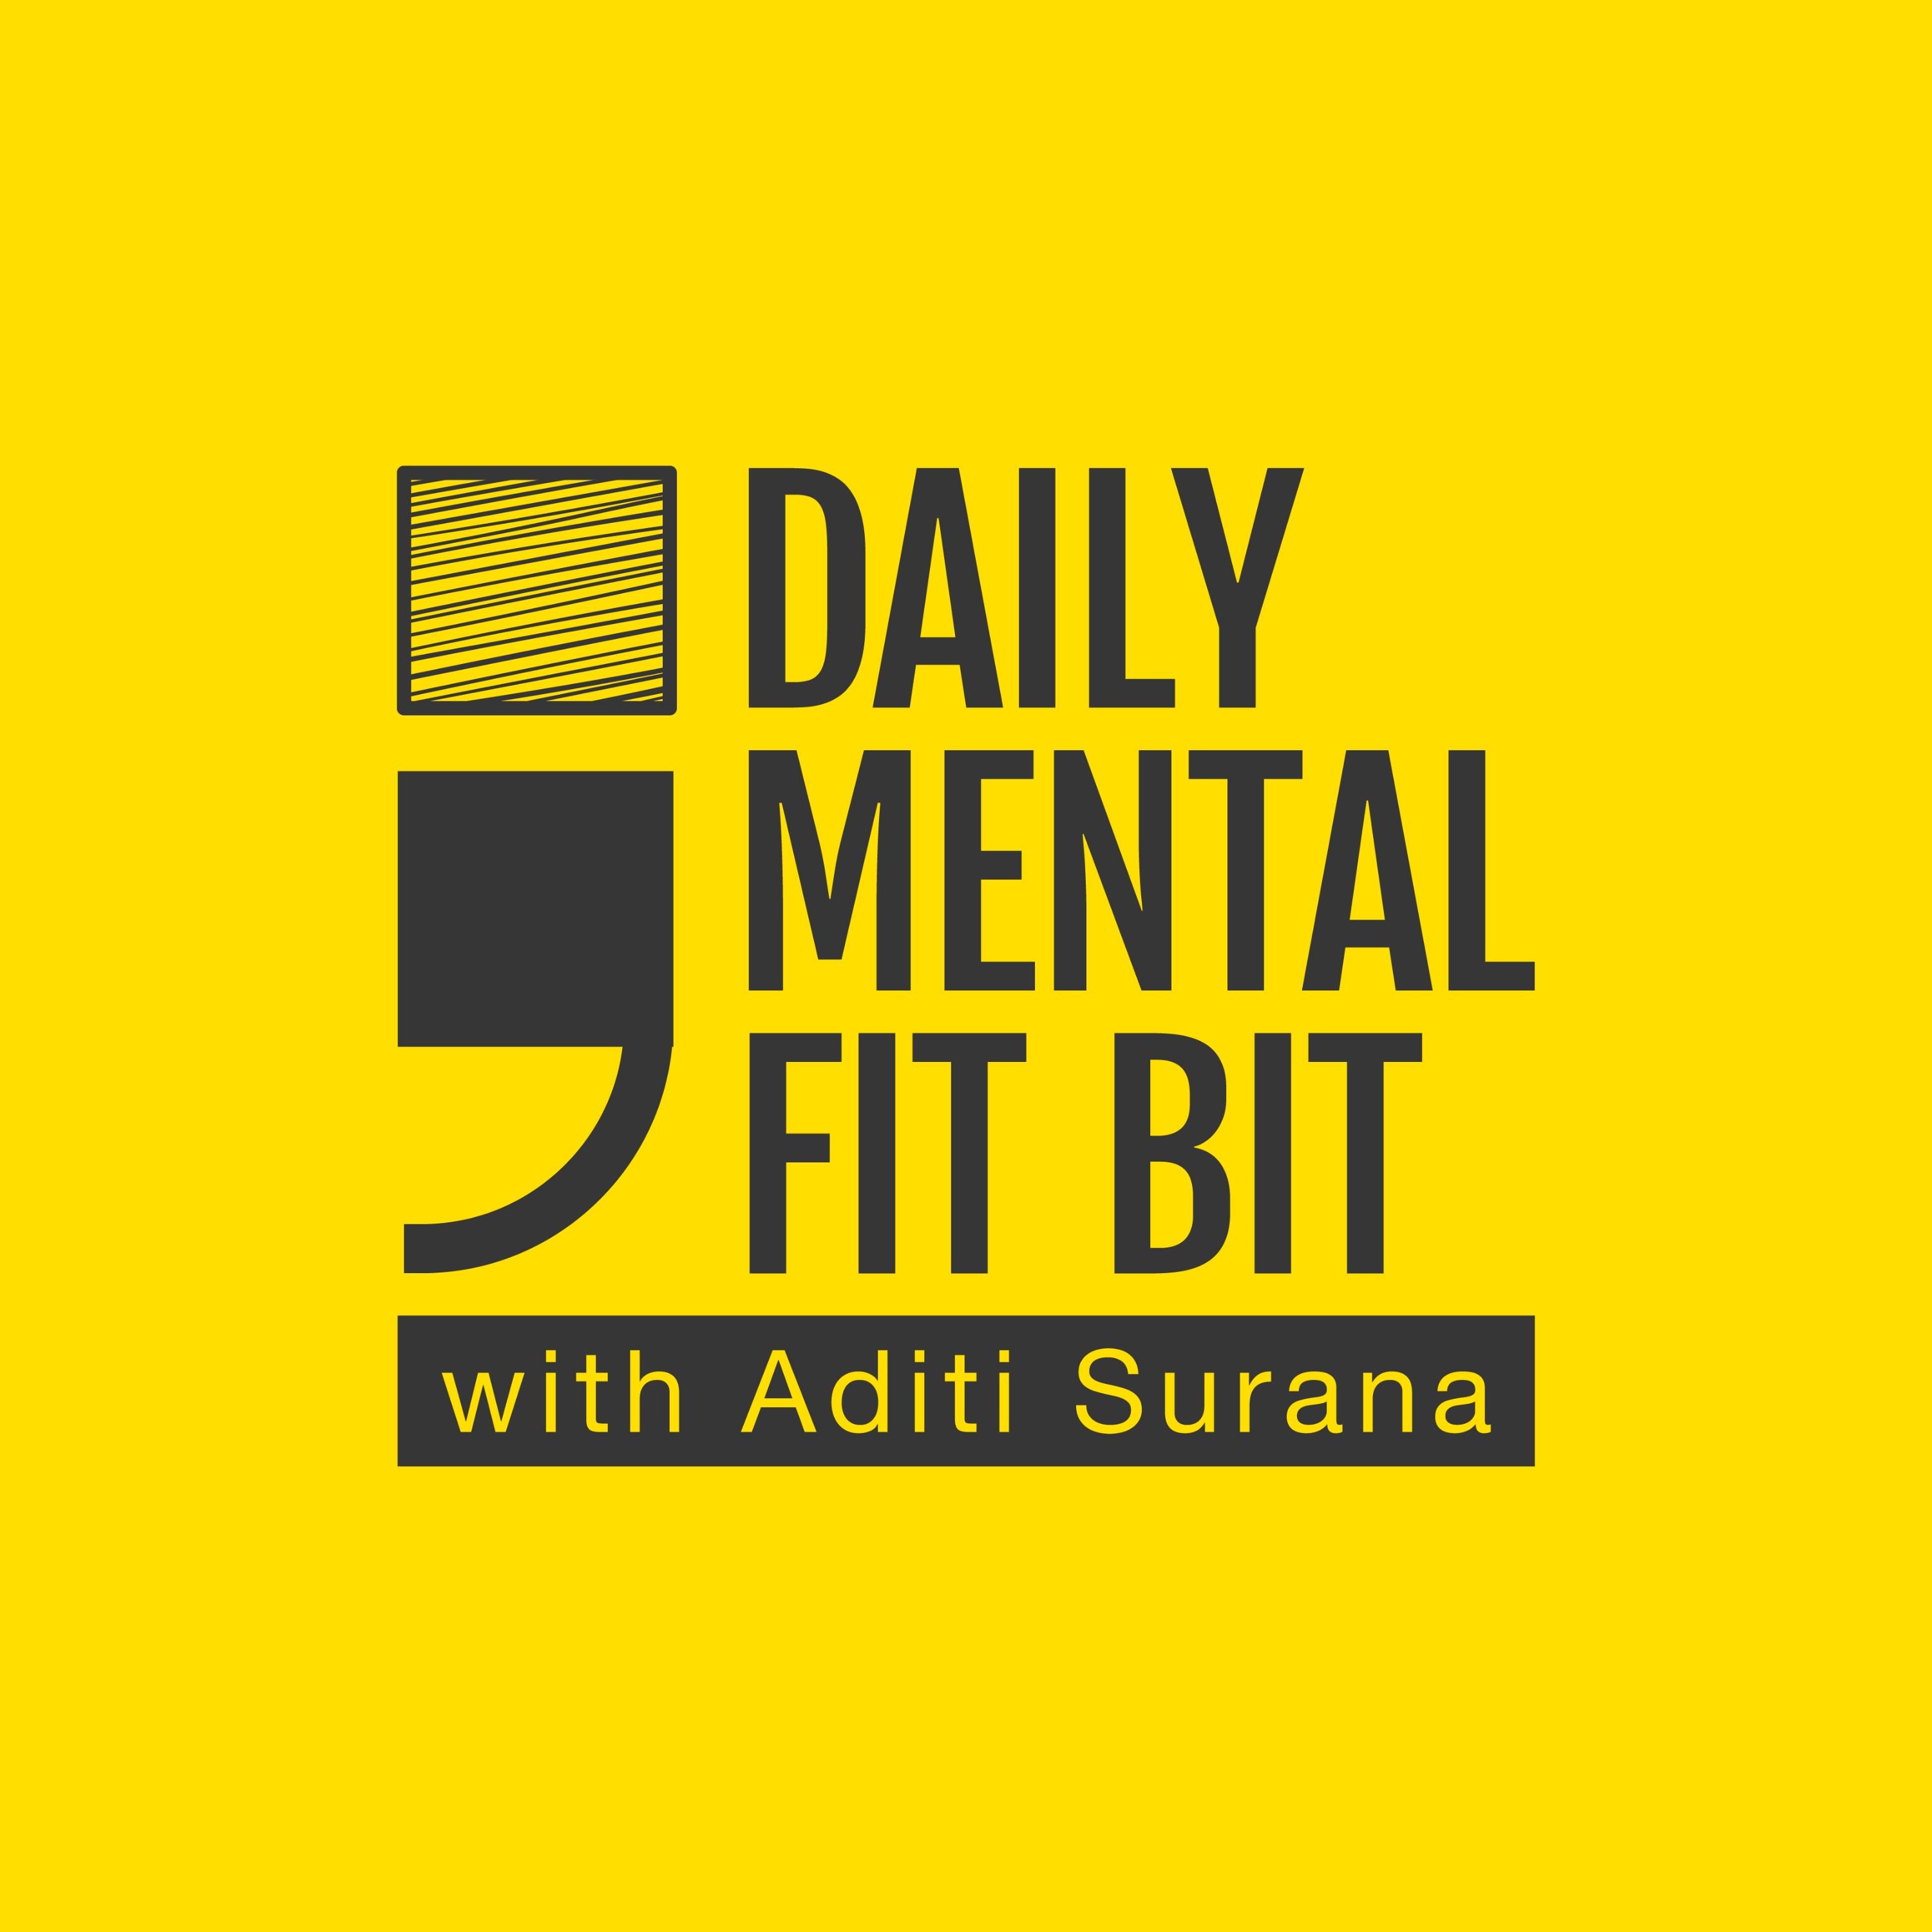 Daily Mental fit bit with Aditi Surana